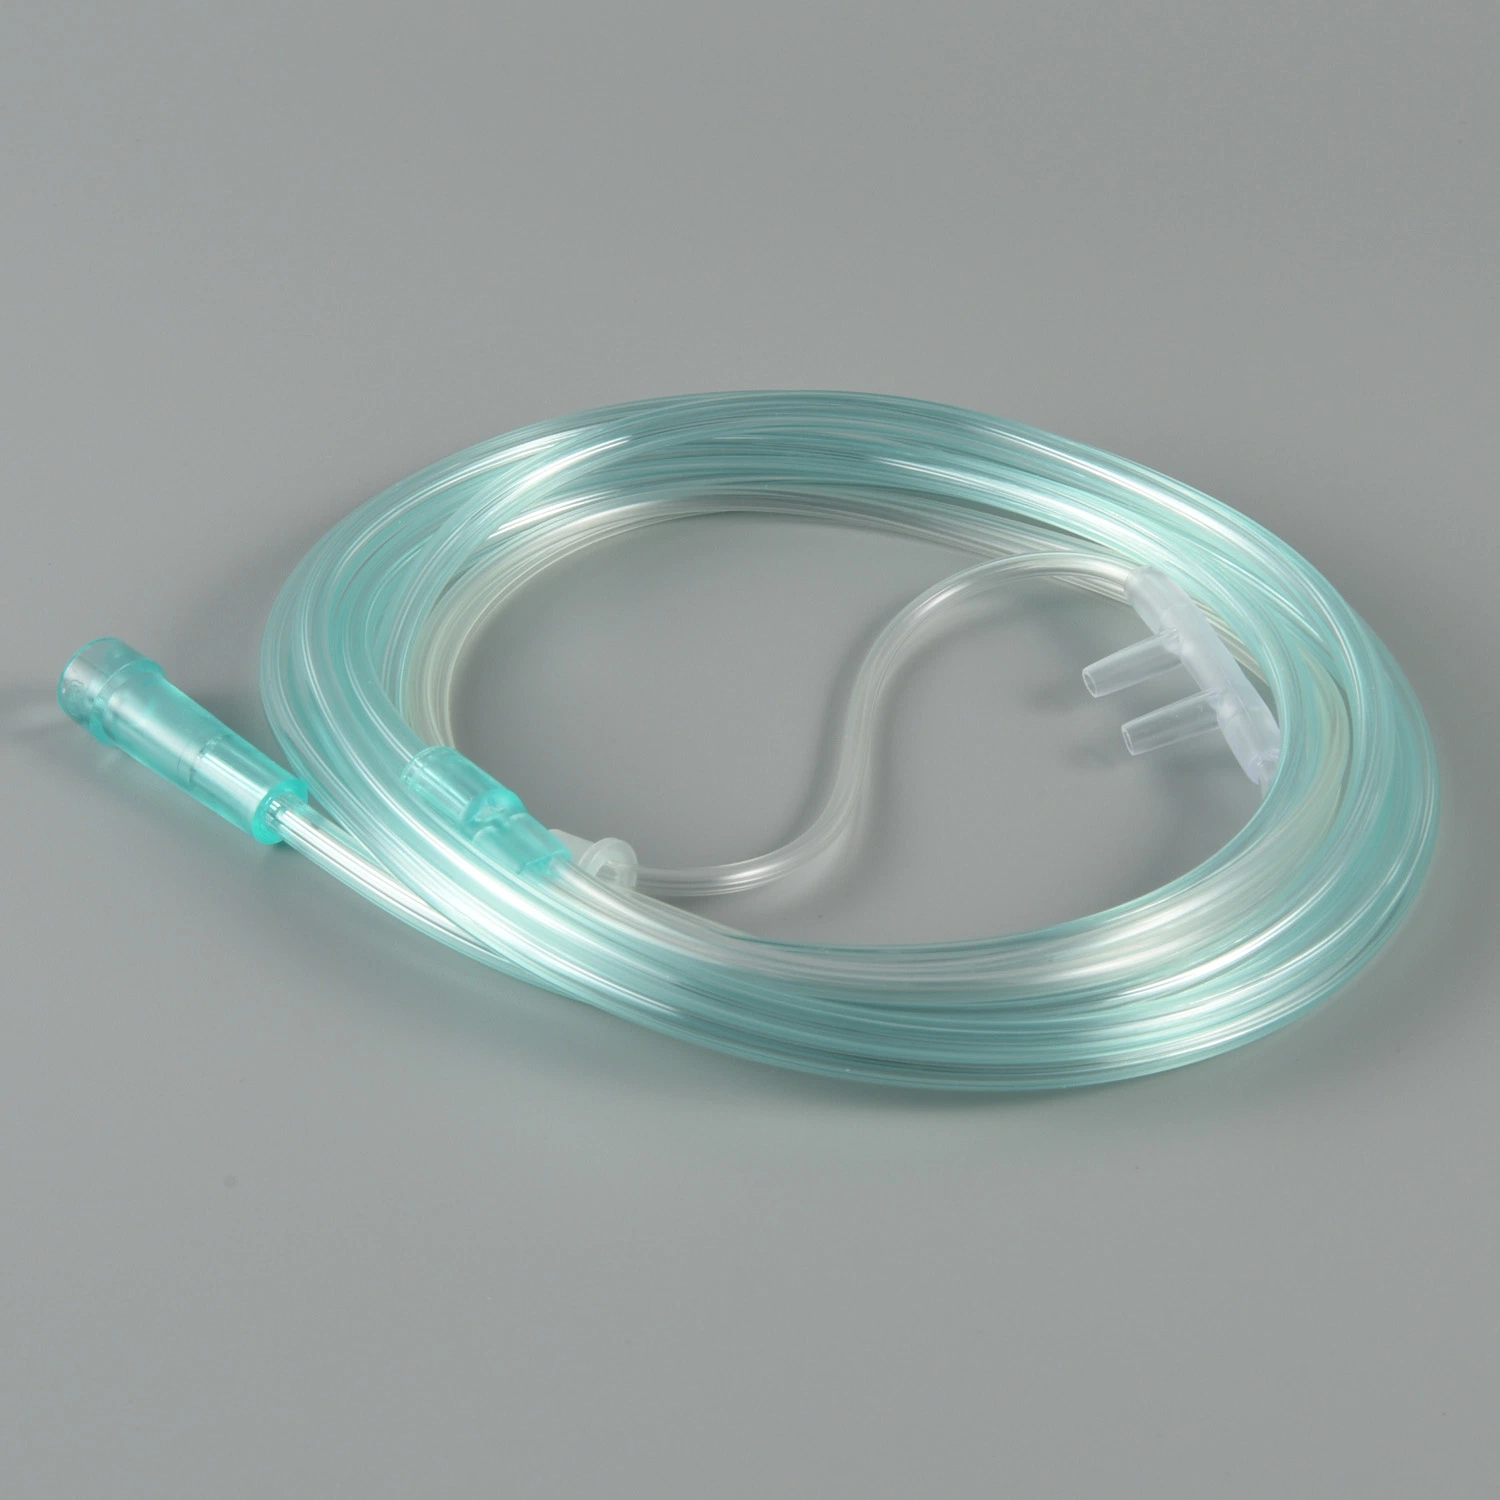 Tube nasal jetable en PVC avec embouts souples